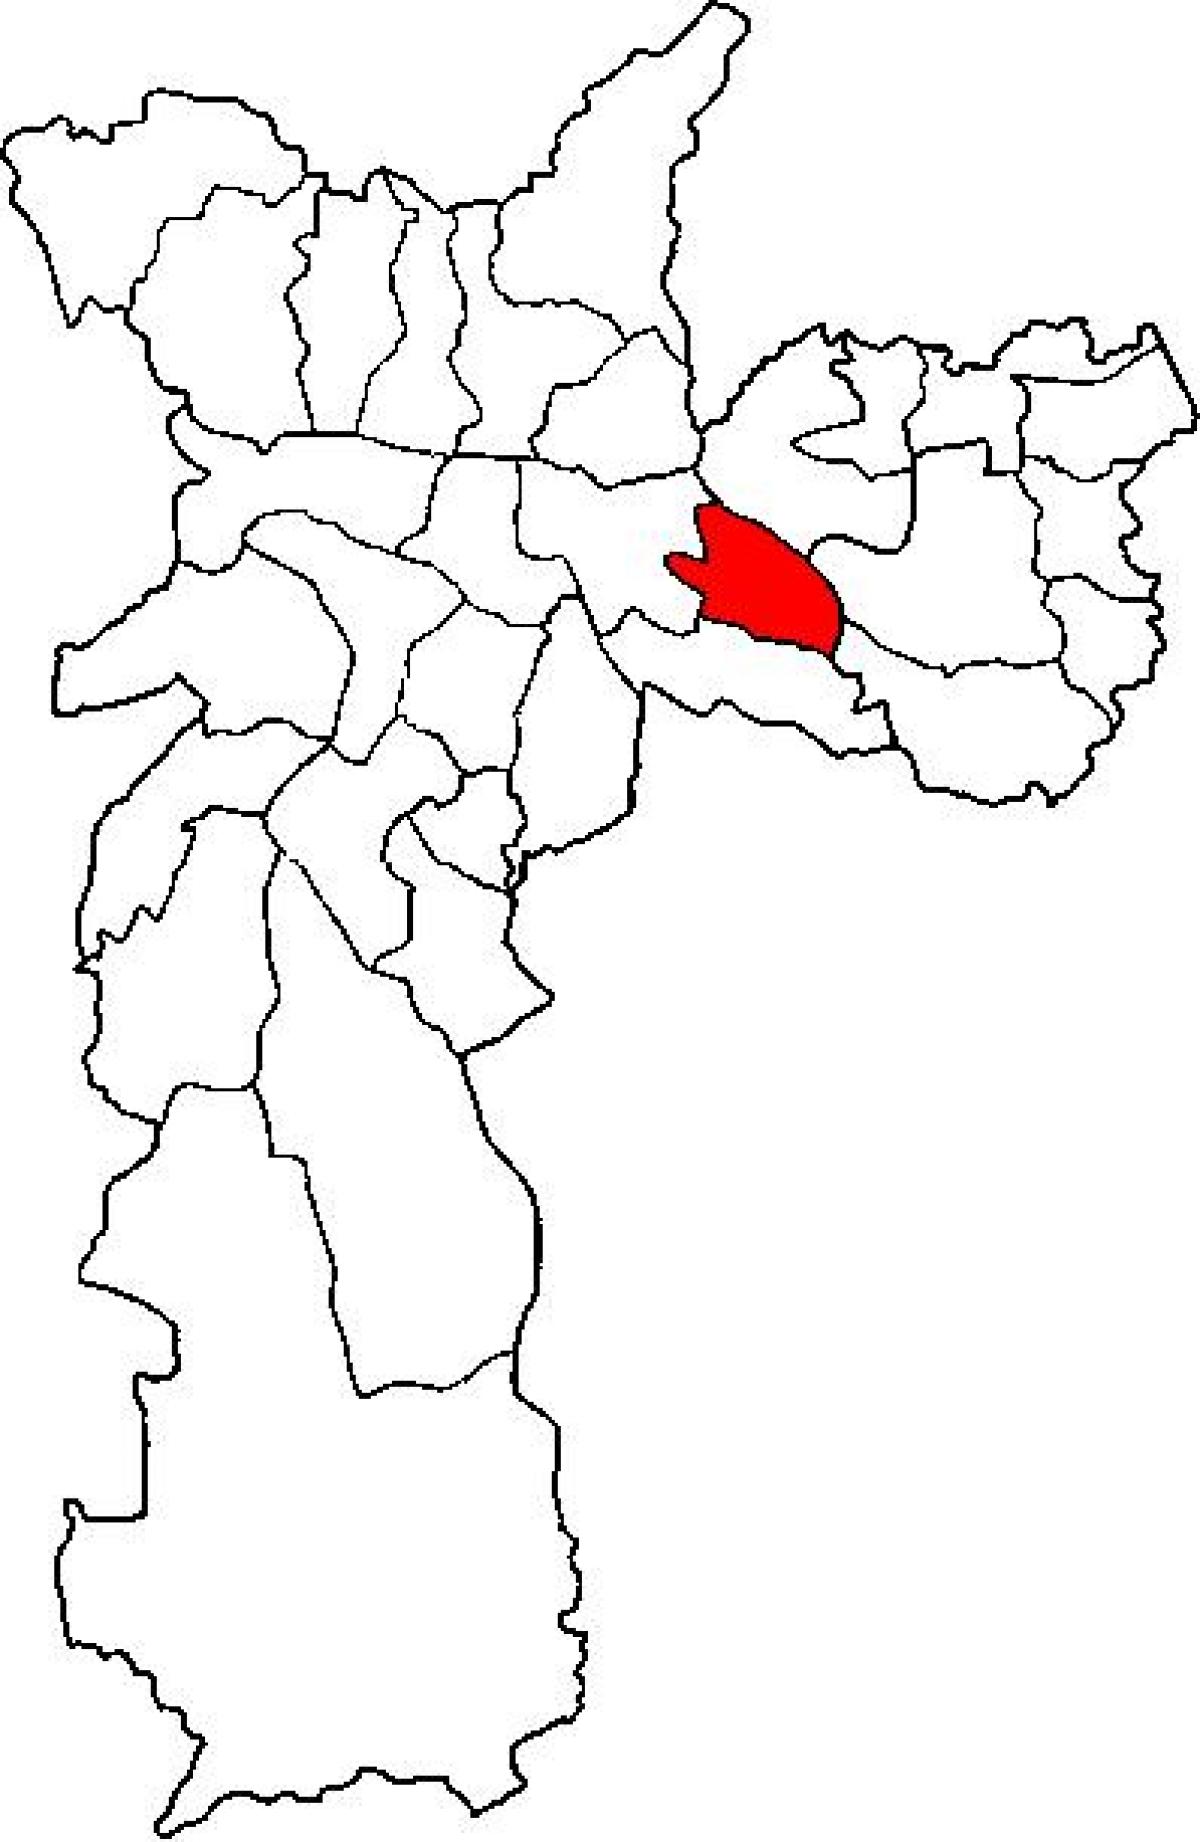 Kort over Aricanduva-Vila Formosa sub-præfekturet São Paulo